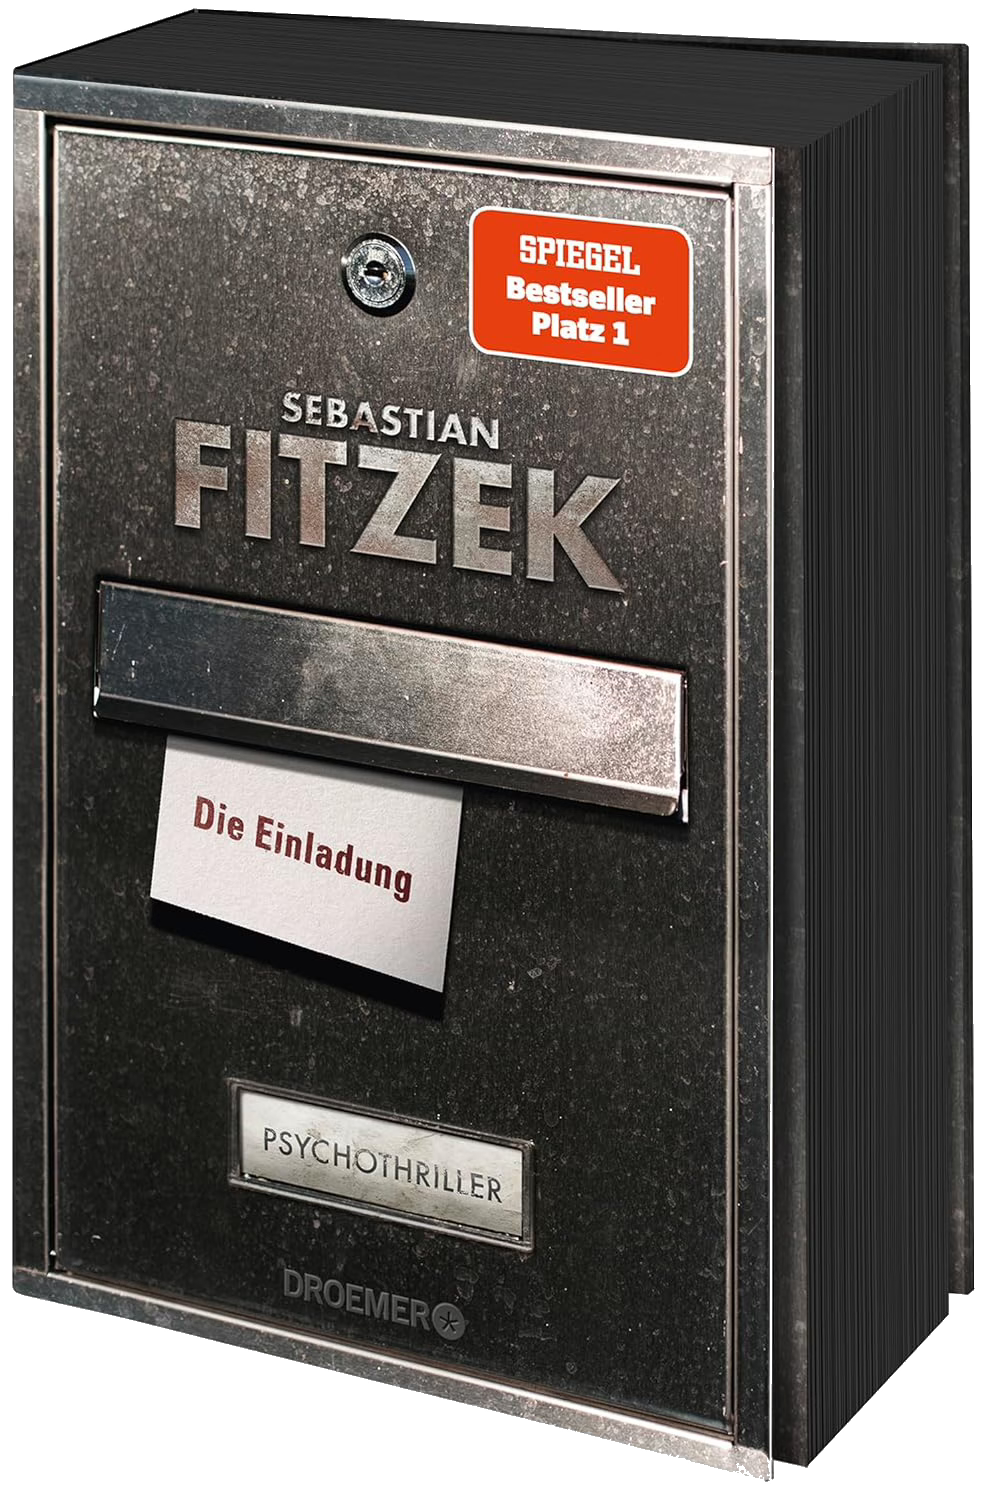 (Special Edition Cover of Sebastian Fitzek’s “Die Einladung”)